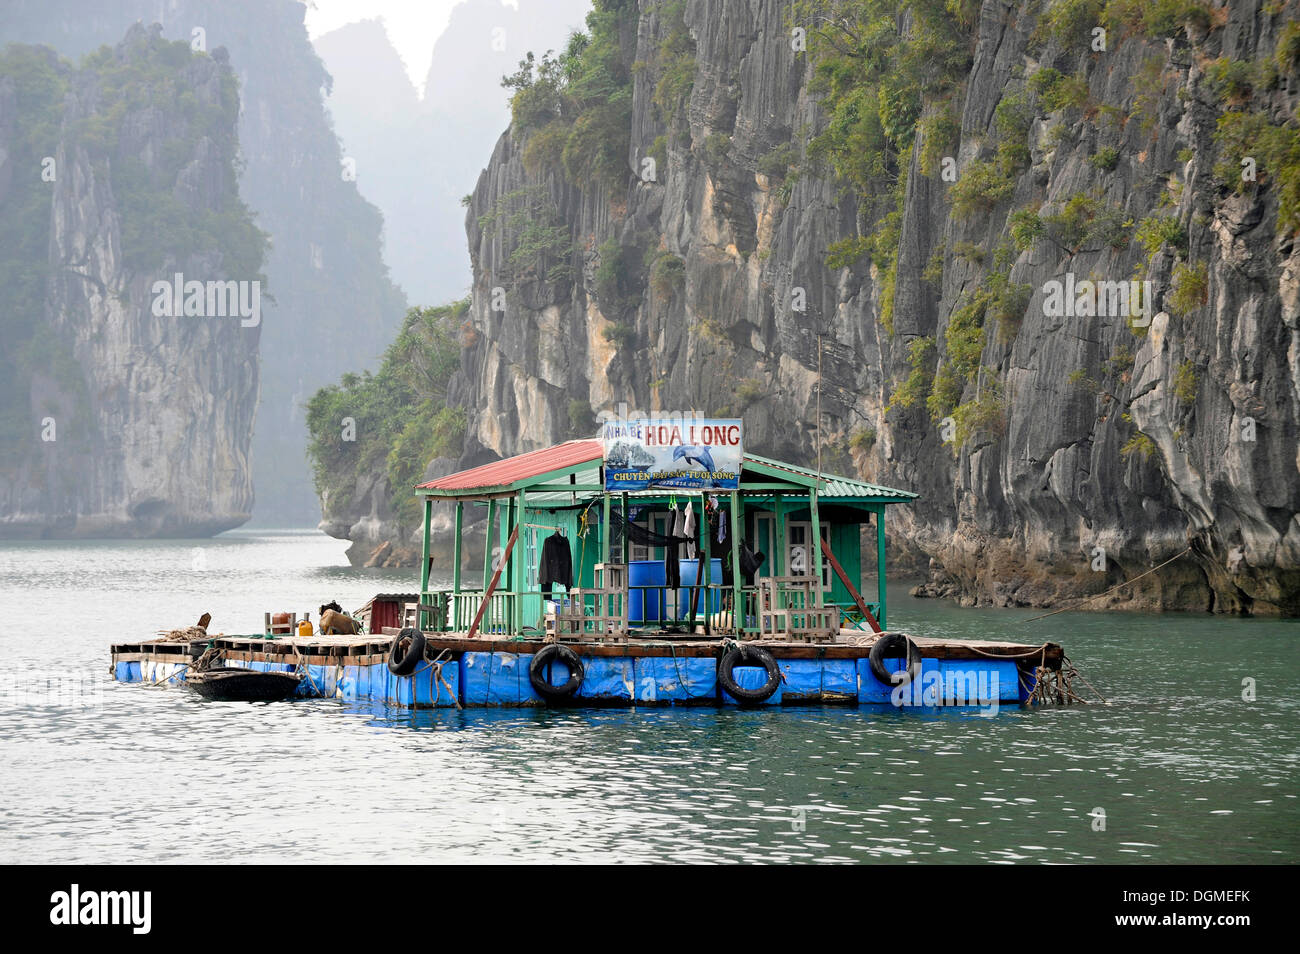 Floating fish farming, Halong Bay, Vinh Ha Long, North Vietnam, Vietnam, Southeast Asia, Asia Stock Photo